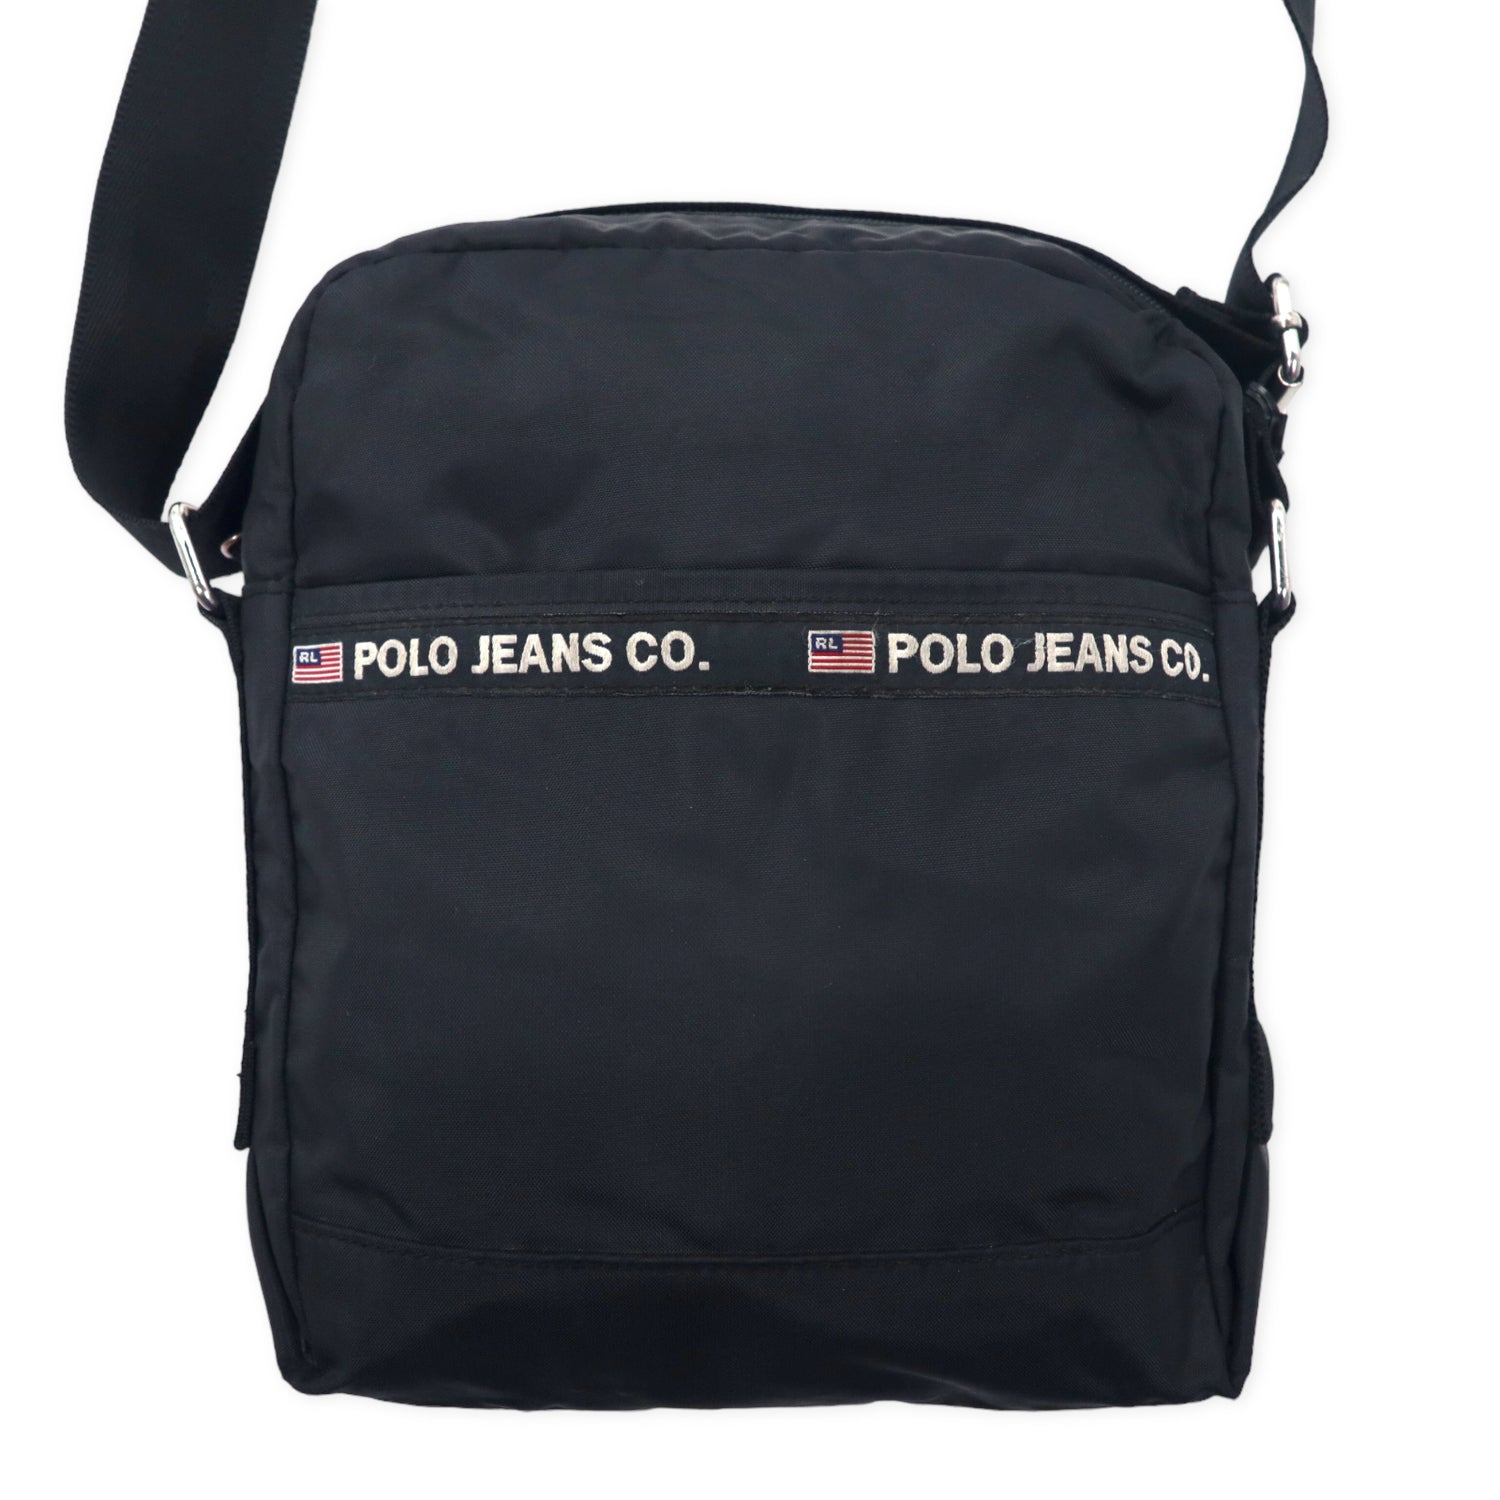 POLO JEANS CO. Ralph Lauren 90's mini shoulder bag black nylon 